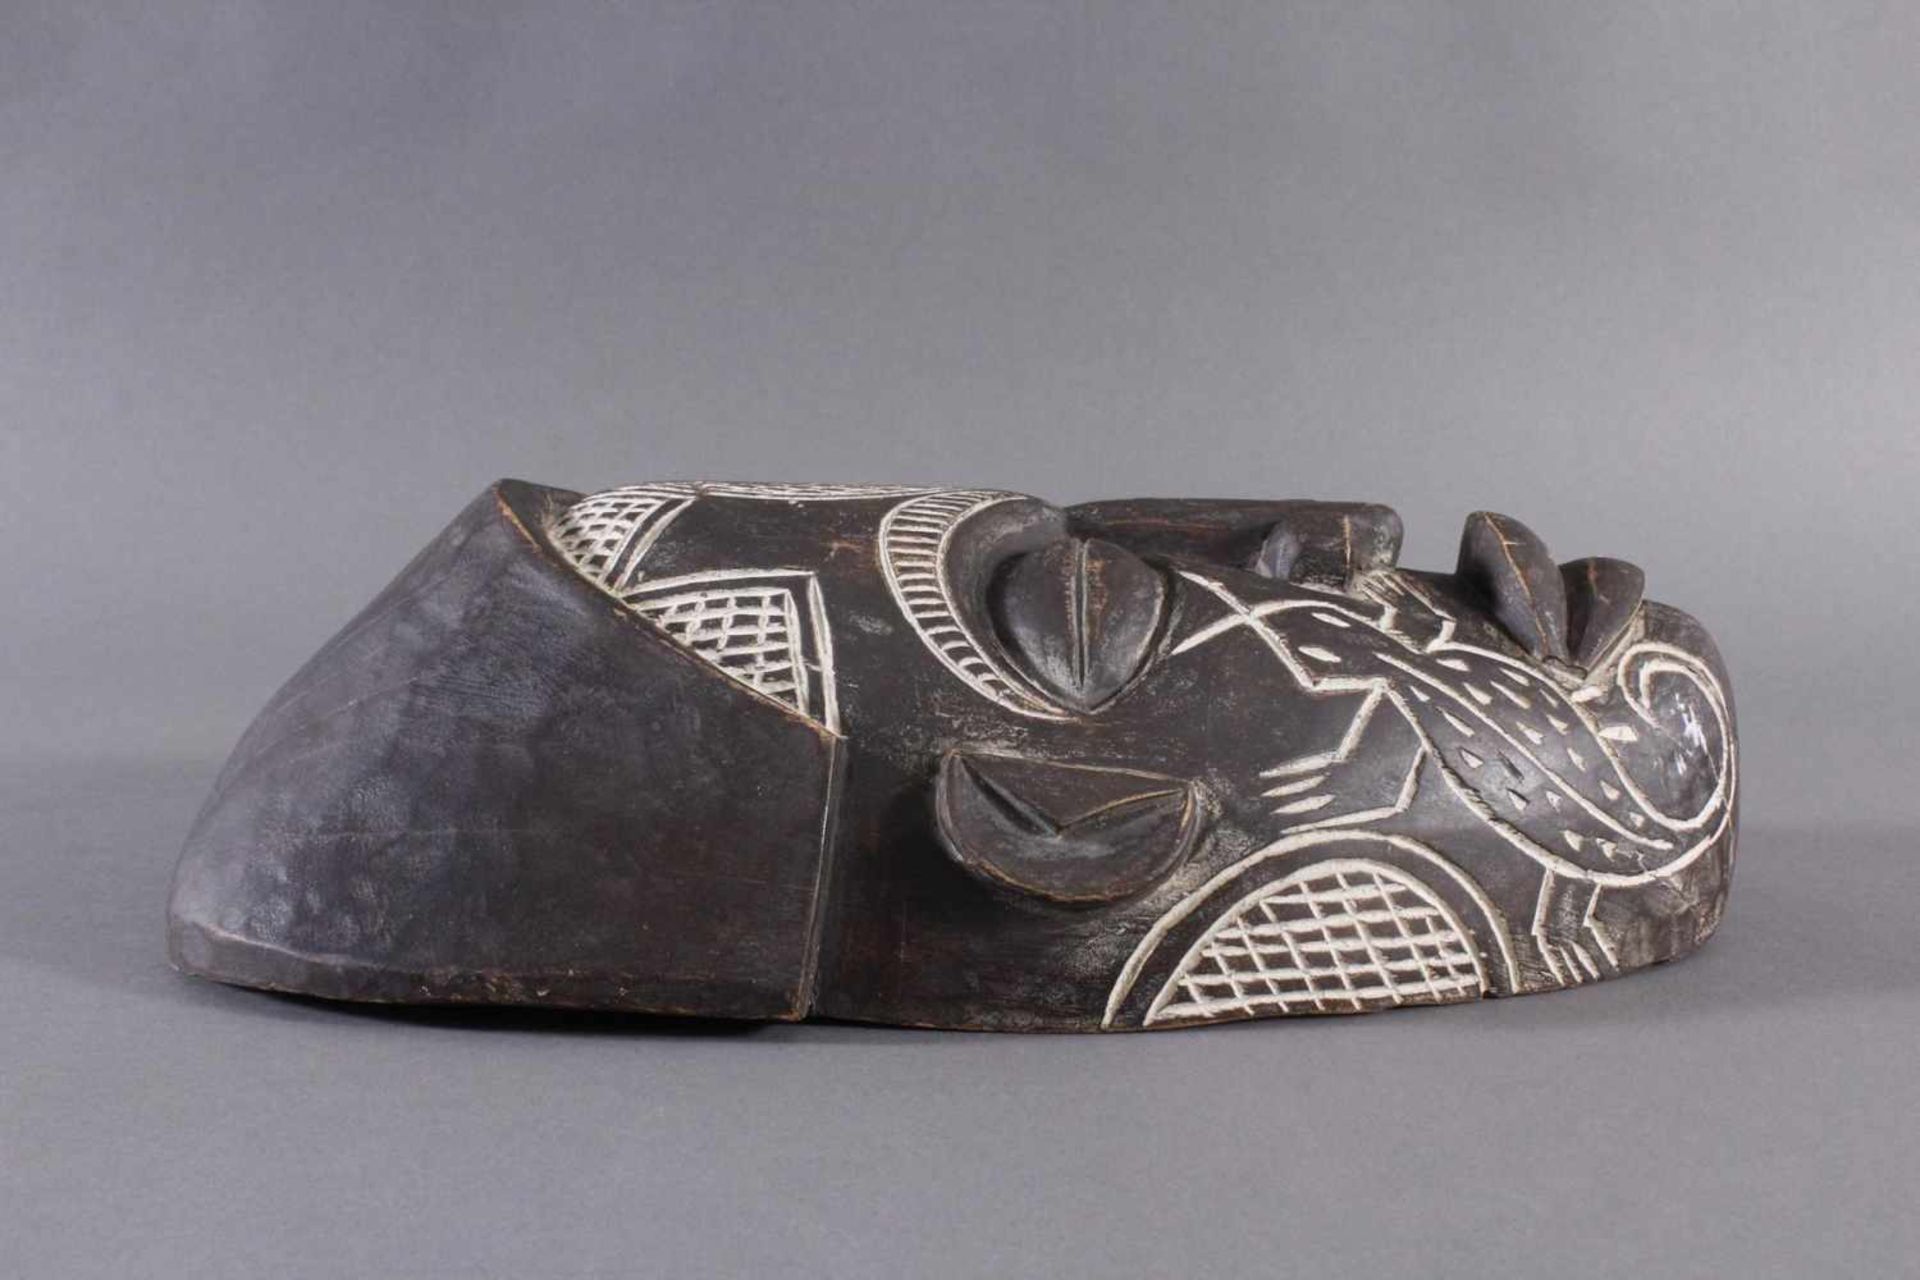 Antike Maske, Chokwe, Angola 1. Hälfte 20. Jh.Holz geschnitzt, dunkle Patina, Narbentatauierung, ca. - Bild 3 aus 7